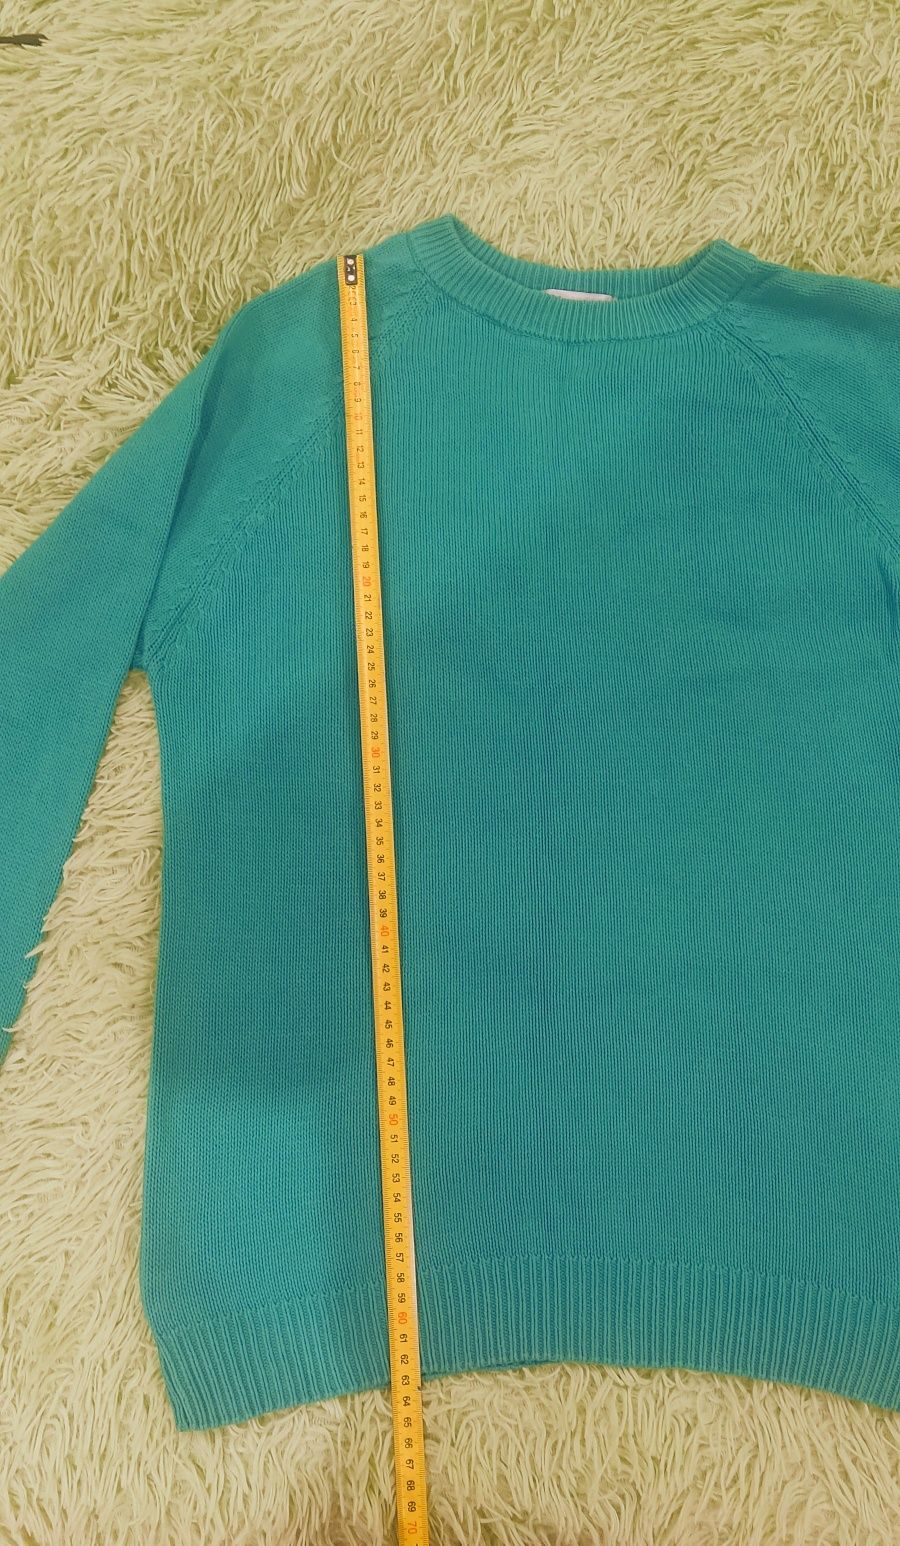 Пуловер женский бирюзового цвета. Р 46-48. 180 грн